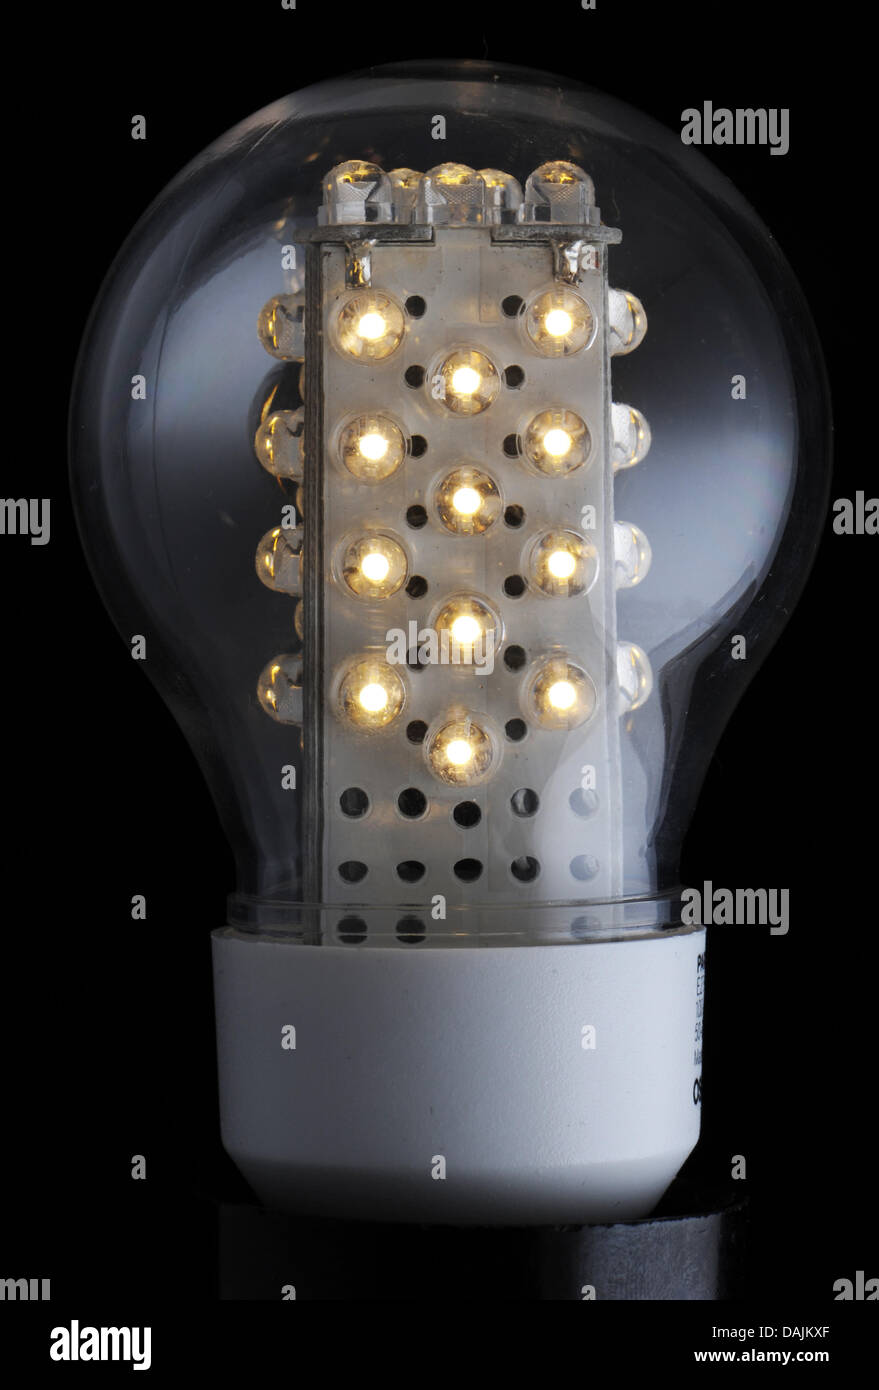 OSRAM LED BASE Classic P40, ampoules LED à filam…